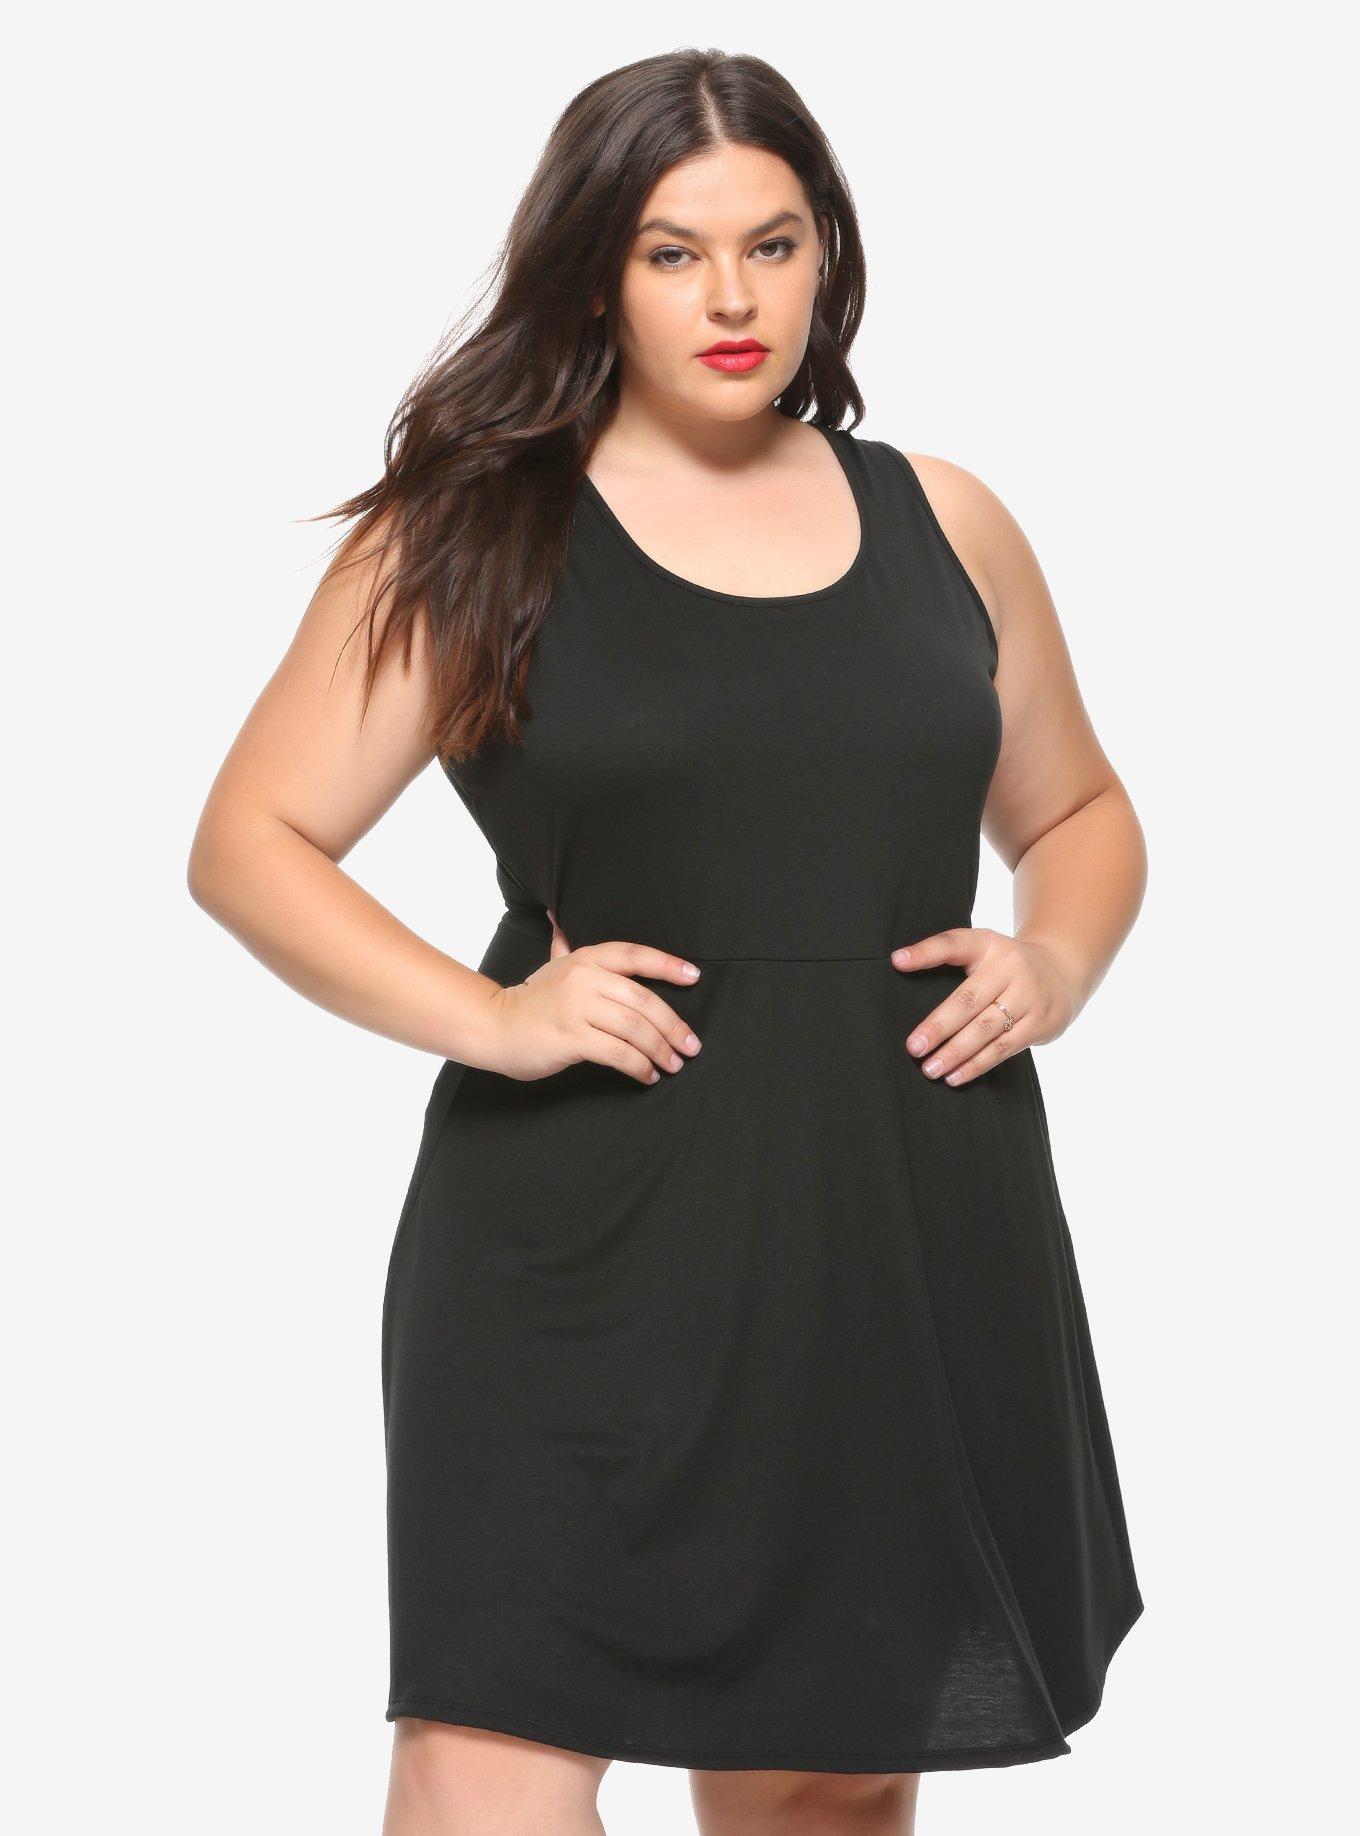 Lace Spine Skater Dress Plus Size, BLACK, alternate